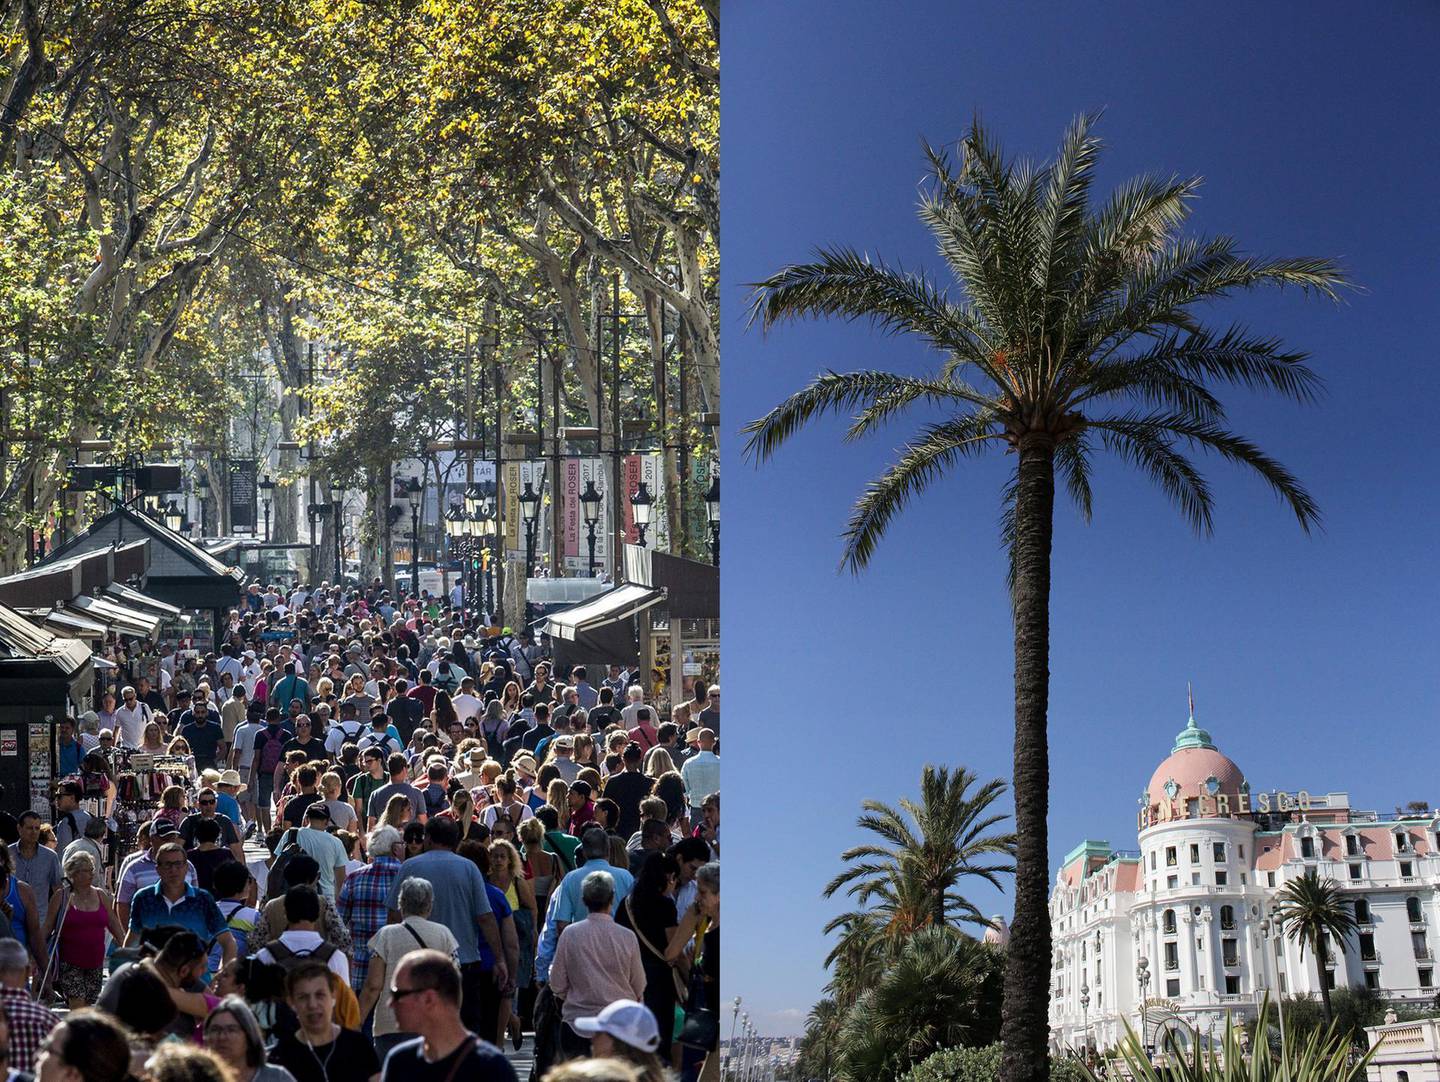 From left: Barcelona, Spain versus Nice, France.